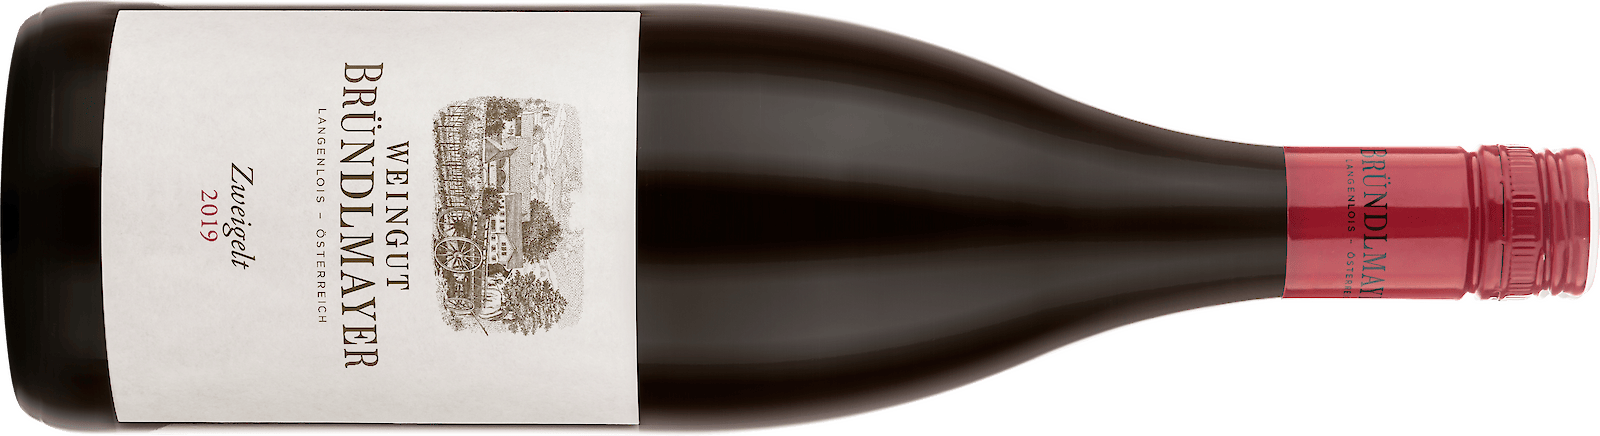 Weingut — 2019 Zweigelt Bründlmayer